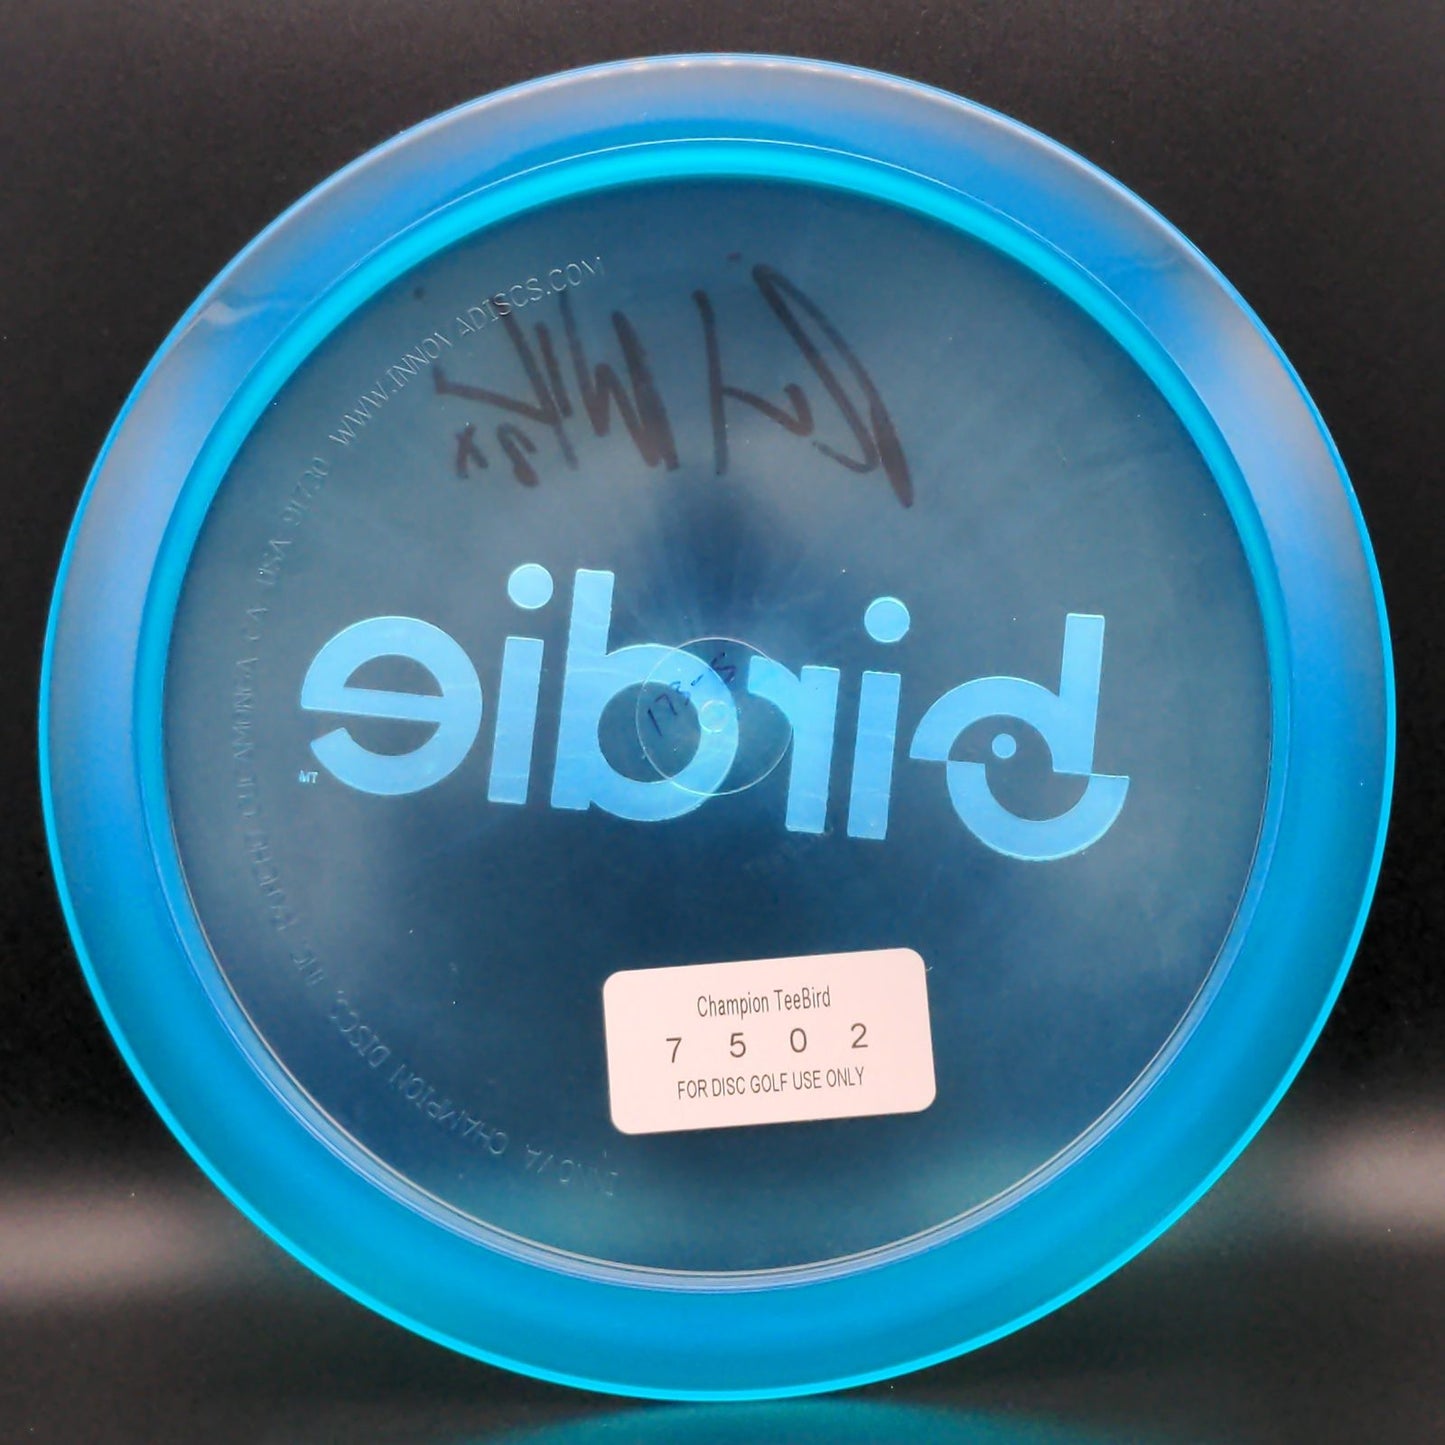 Champion Teebird - Birdie Stamp - Signed by Ricky! Innova